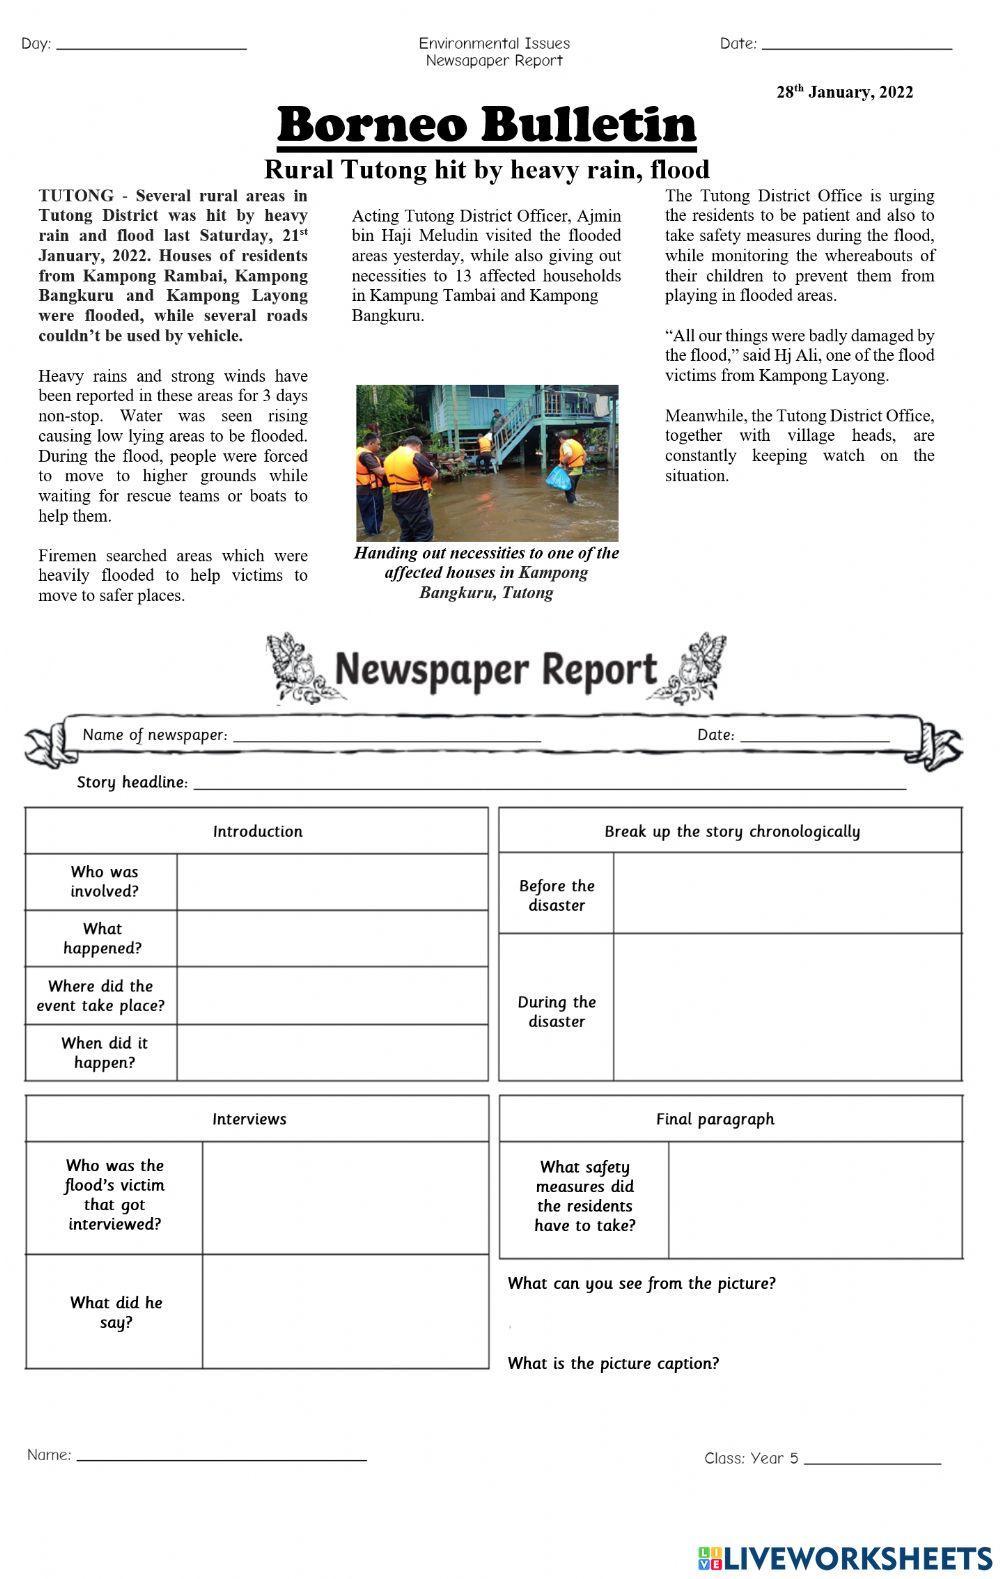 Flood - Newspaper Report